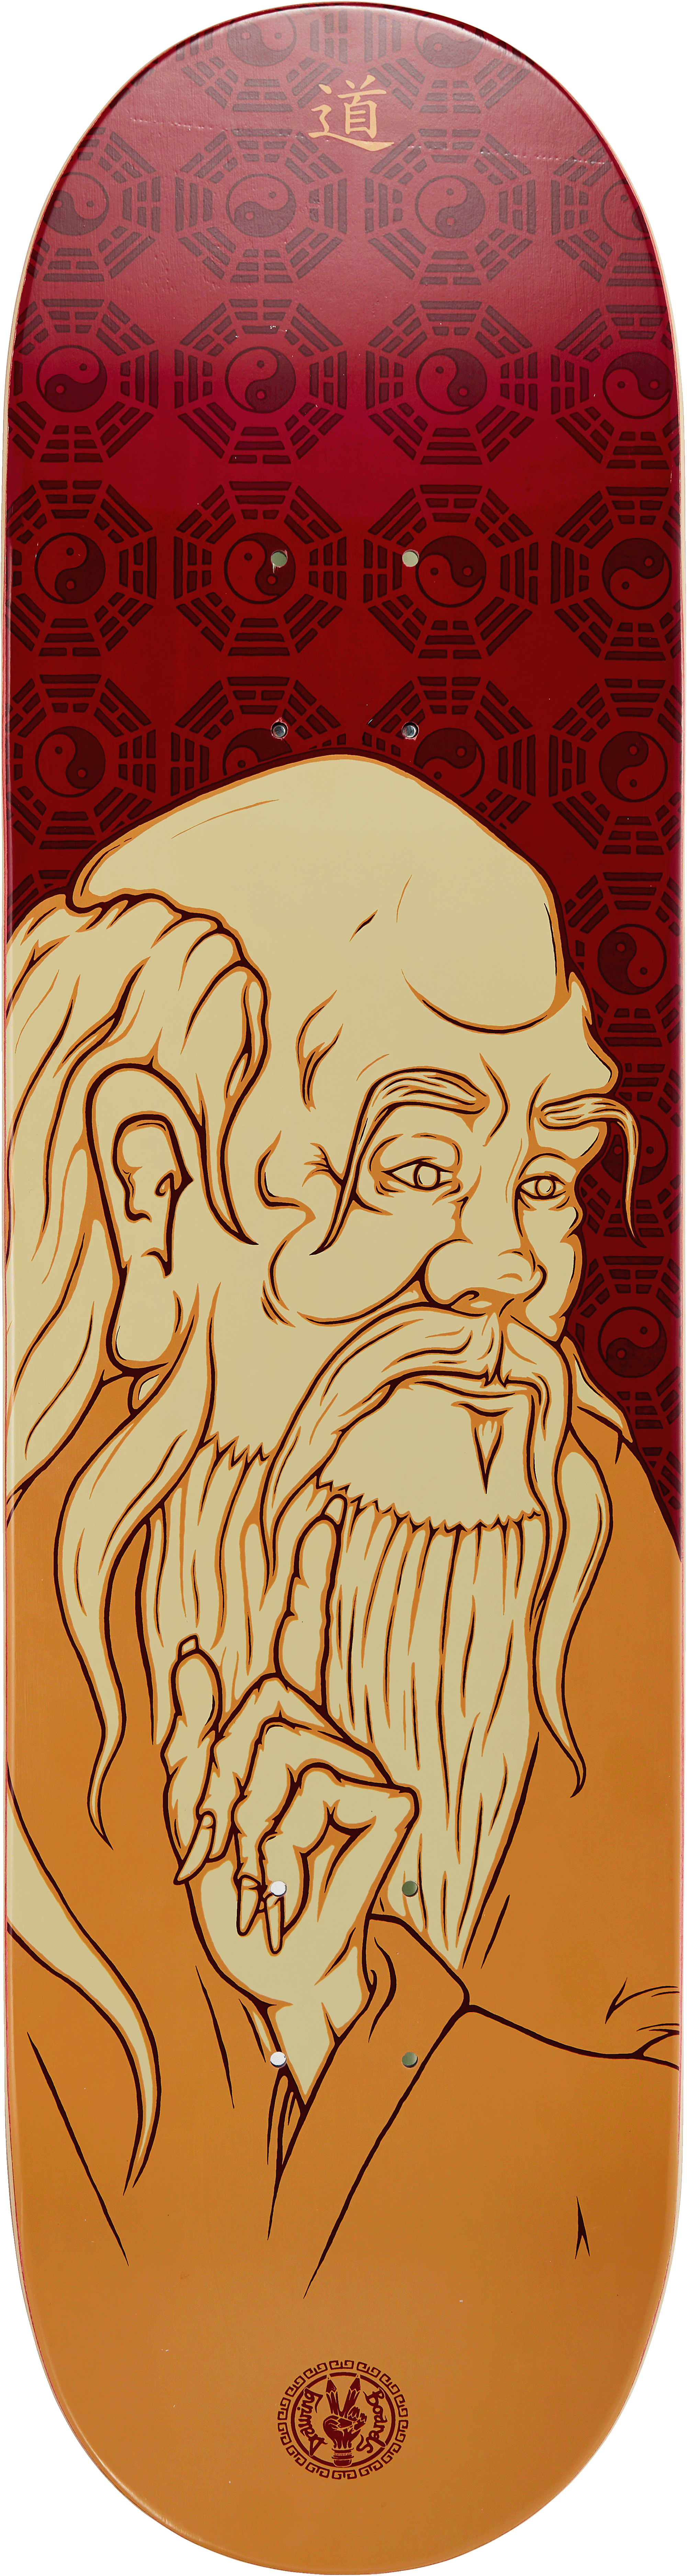 Philosophers - Lao Tzu